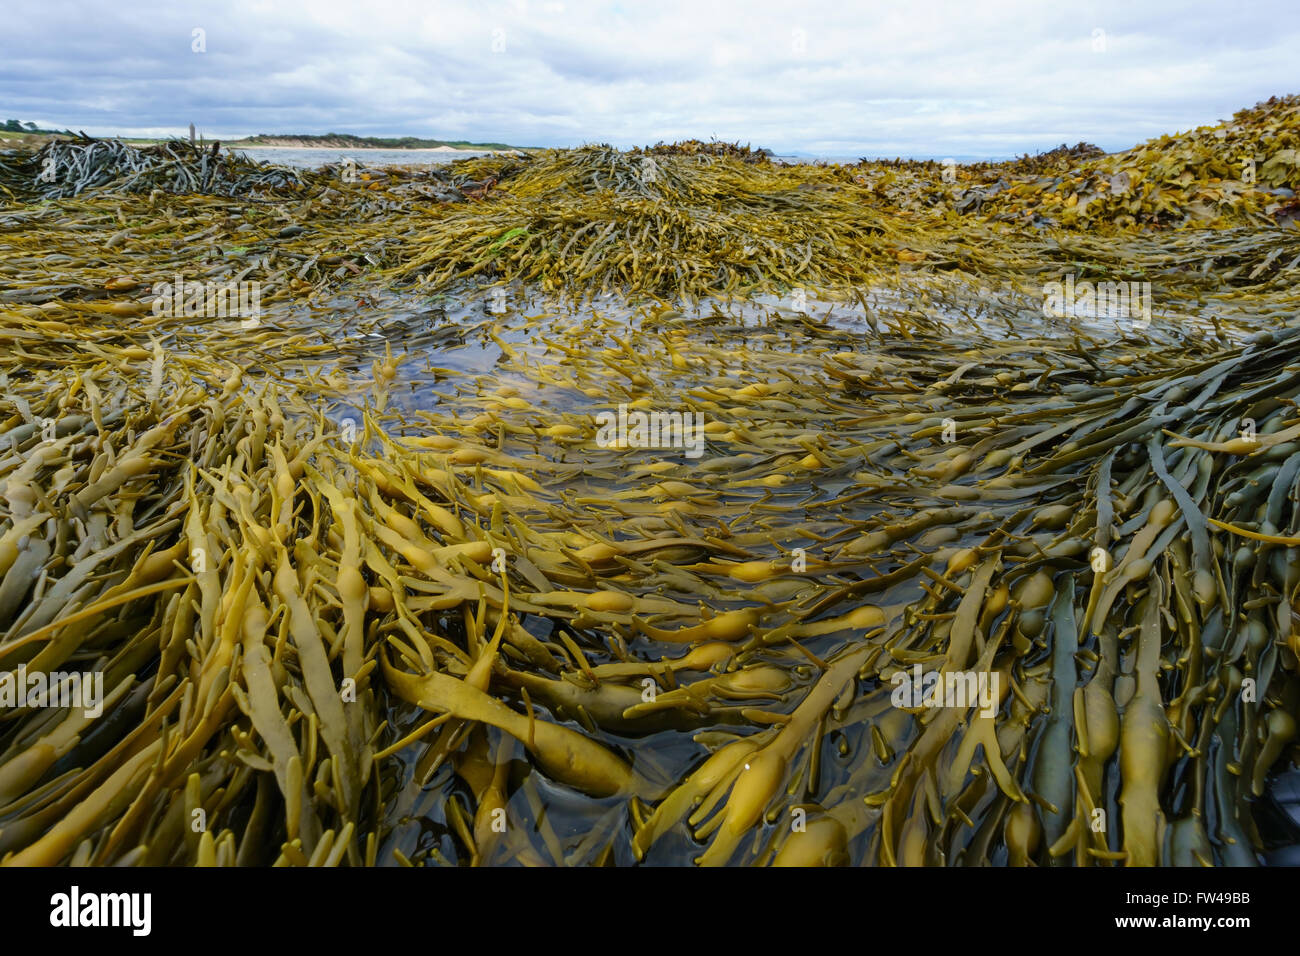 A rockpool full of bladderwrack seaweed (Fucus vesiculosus), in Scotland. Stock Photo